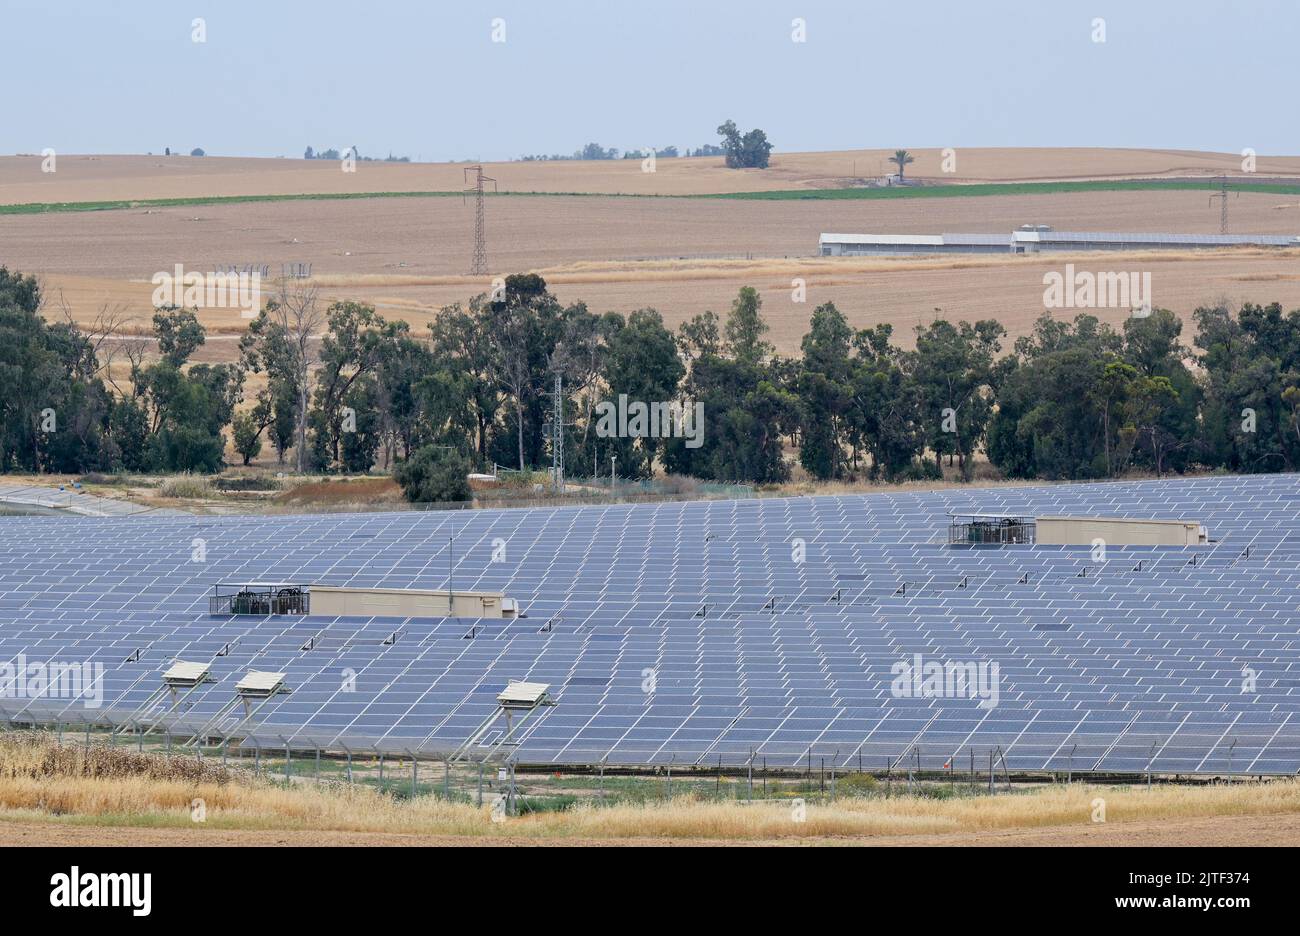 ISRAELE, centrale solare di Kibbutz per irrigazione / Kibutz Farm, Solaranlage für Bewässerung Foto Stock